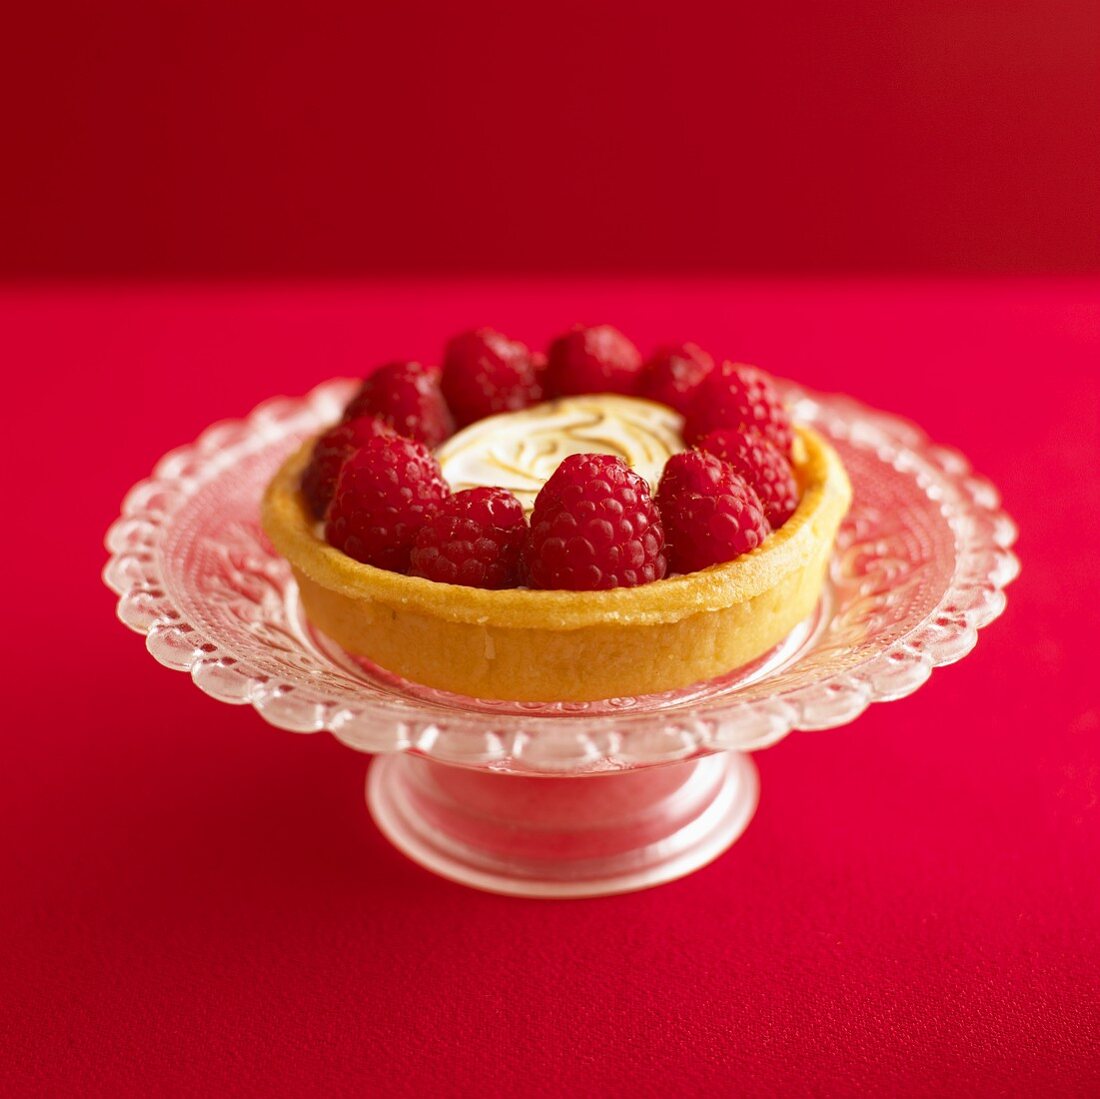 Lemon meringue tart with raspberries